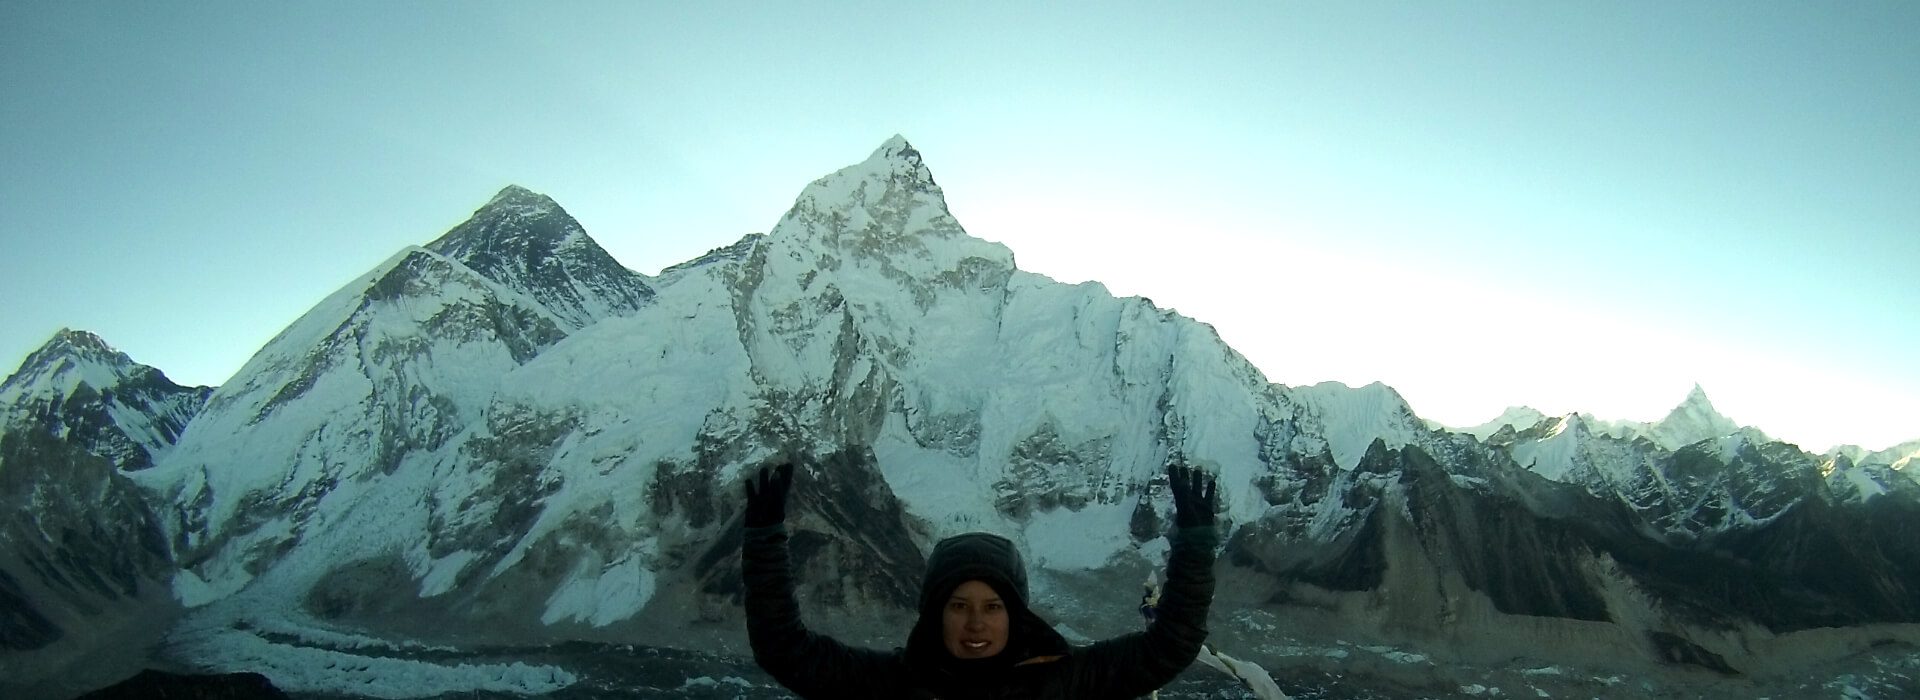 Short Everest Base Camp Trek – 10 Days